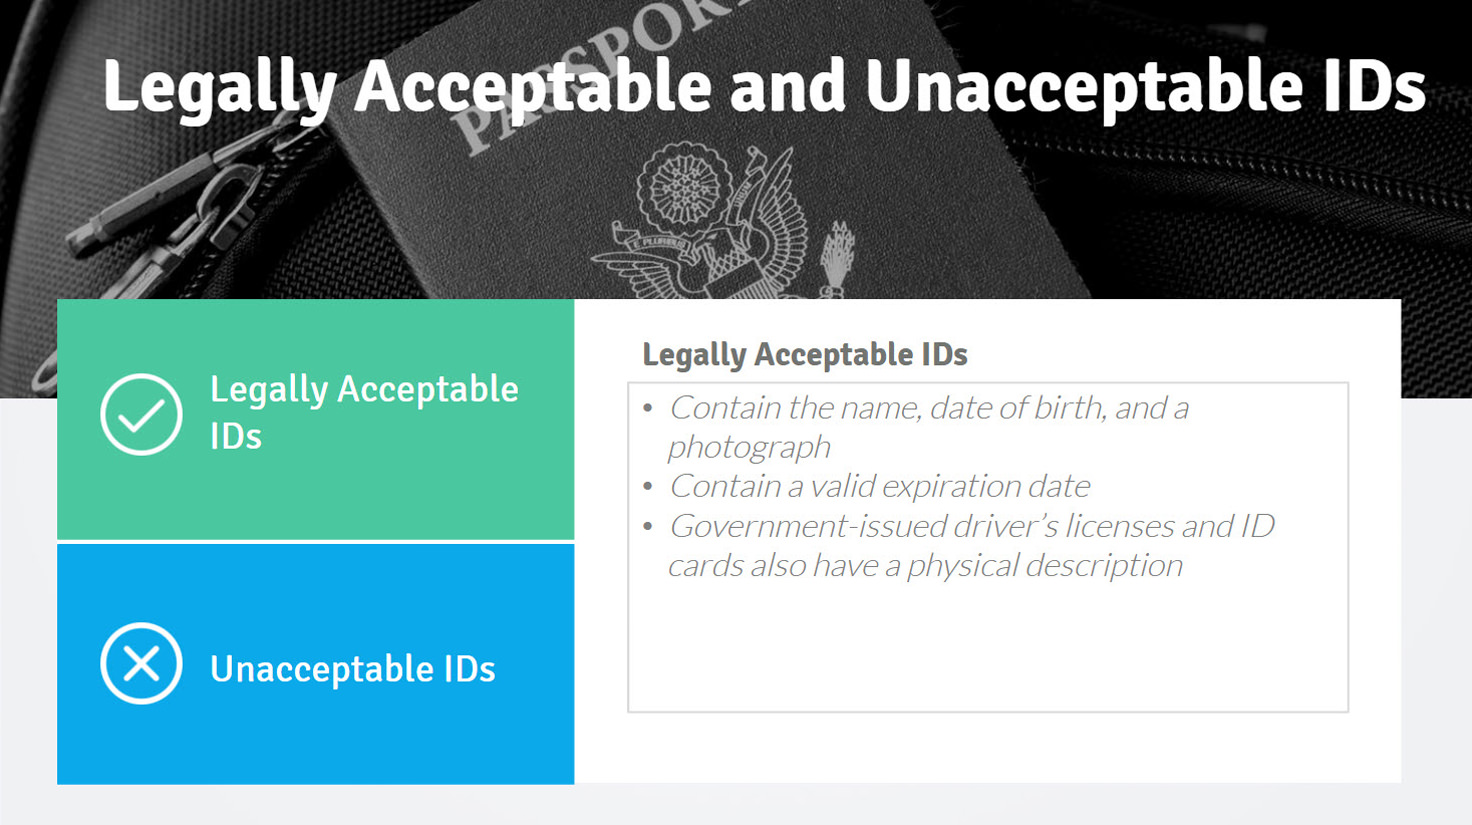 Legal IDs